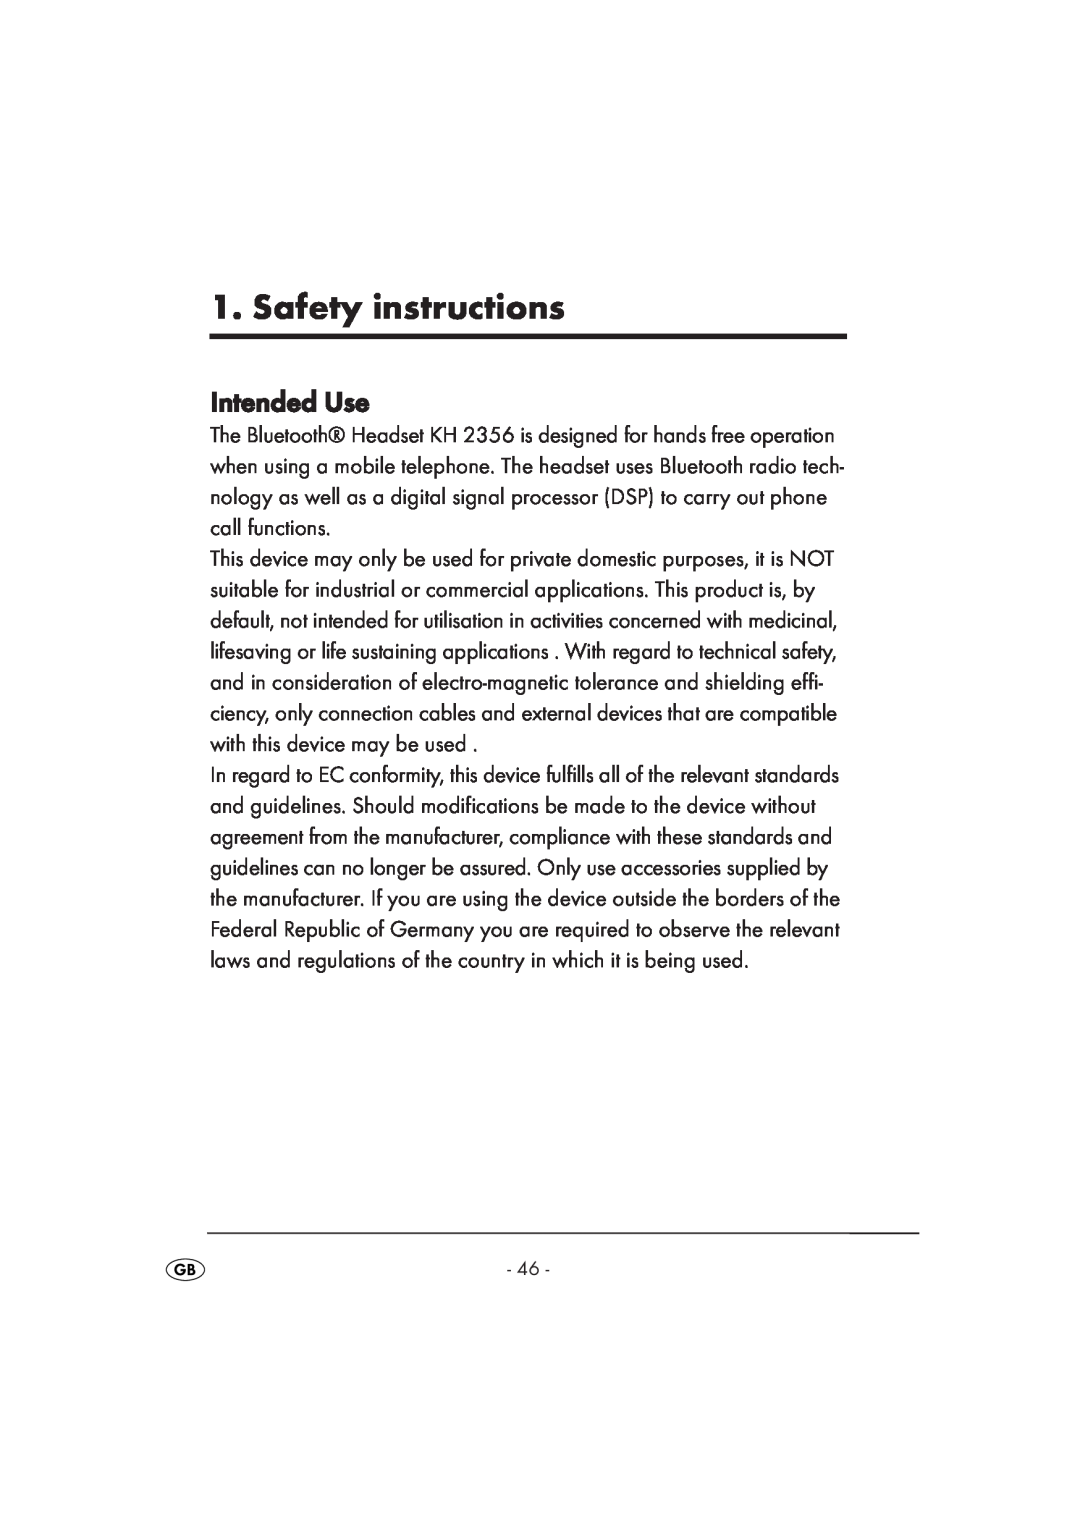 Kompernass KH 2356 manual Safety instructions, Intended Use 